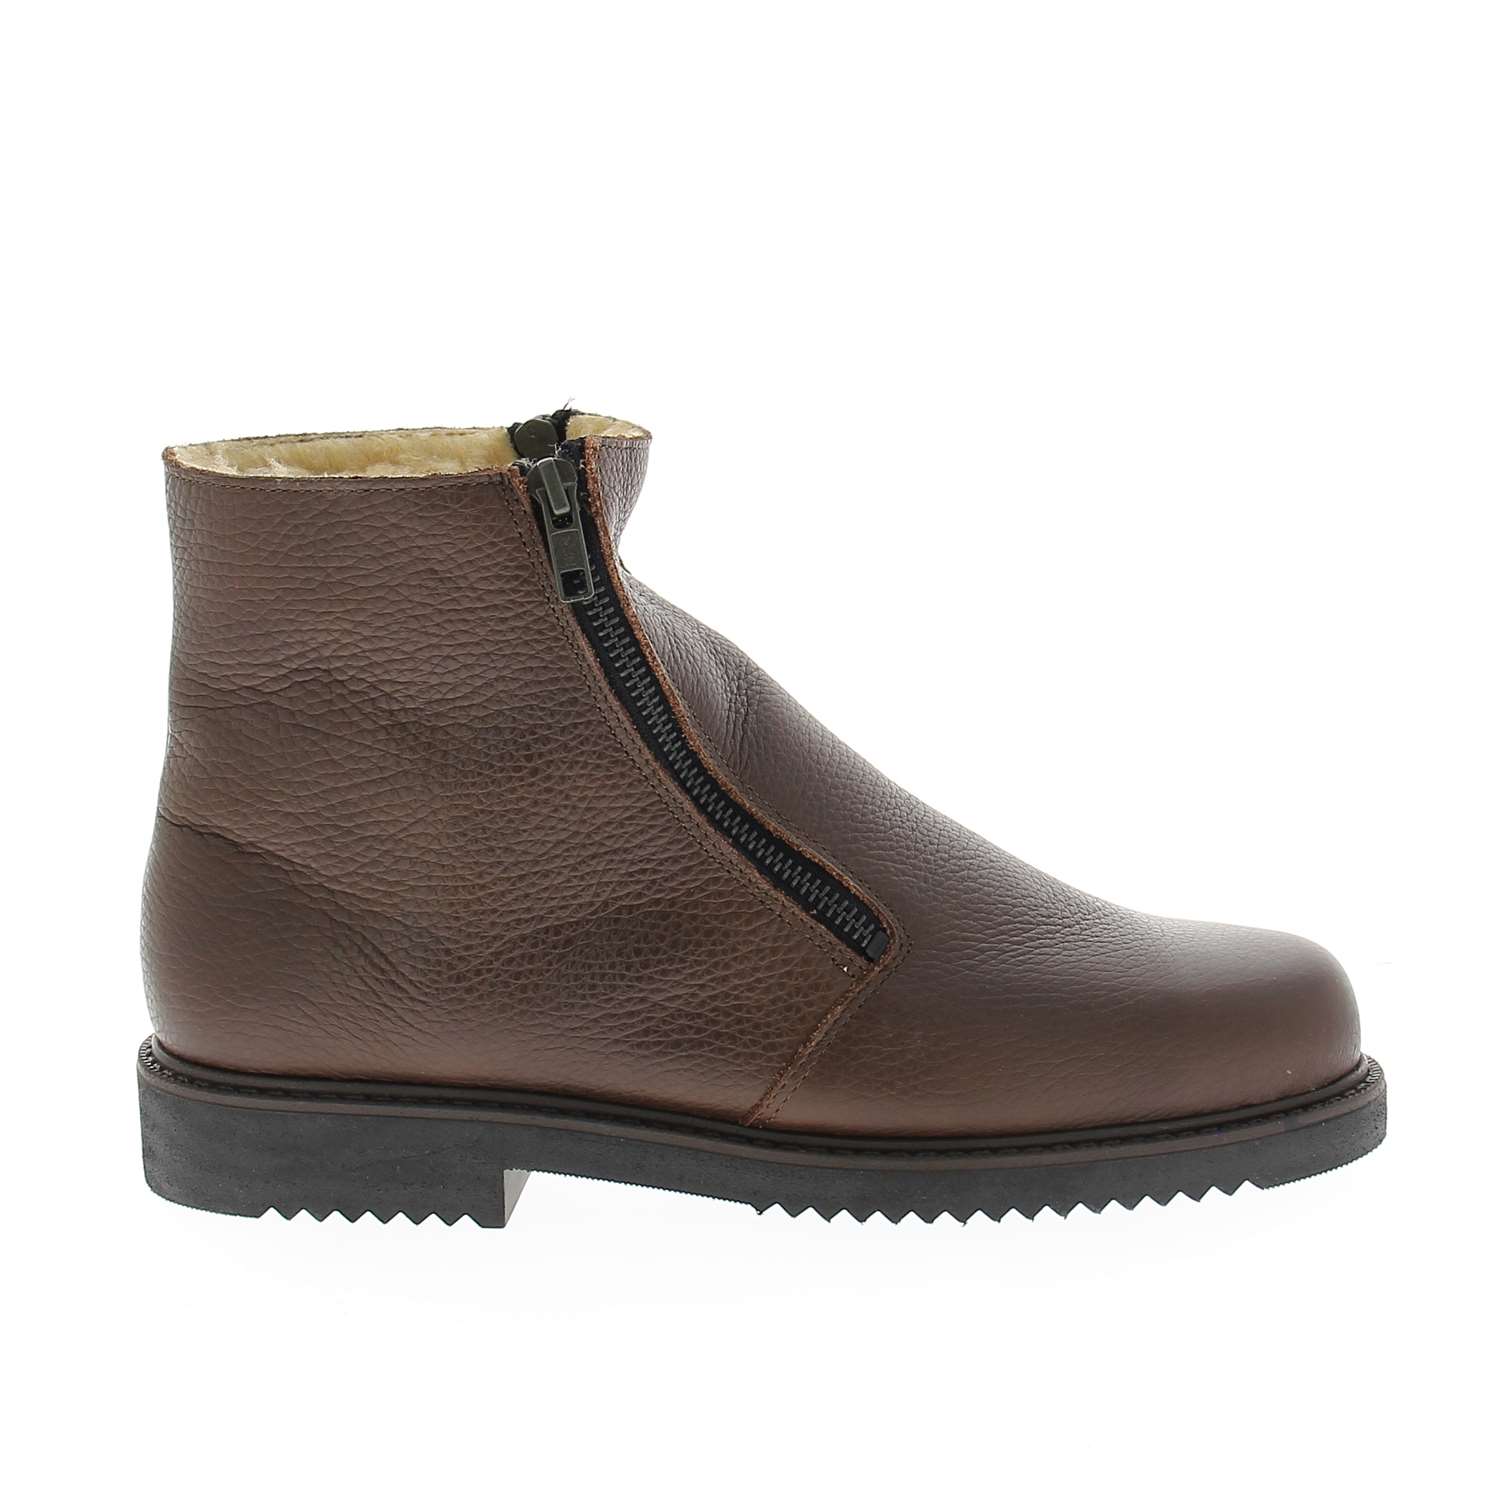 02 - DIBA - CLEON - Boots et bottines - Cuir